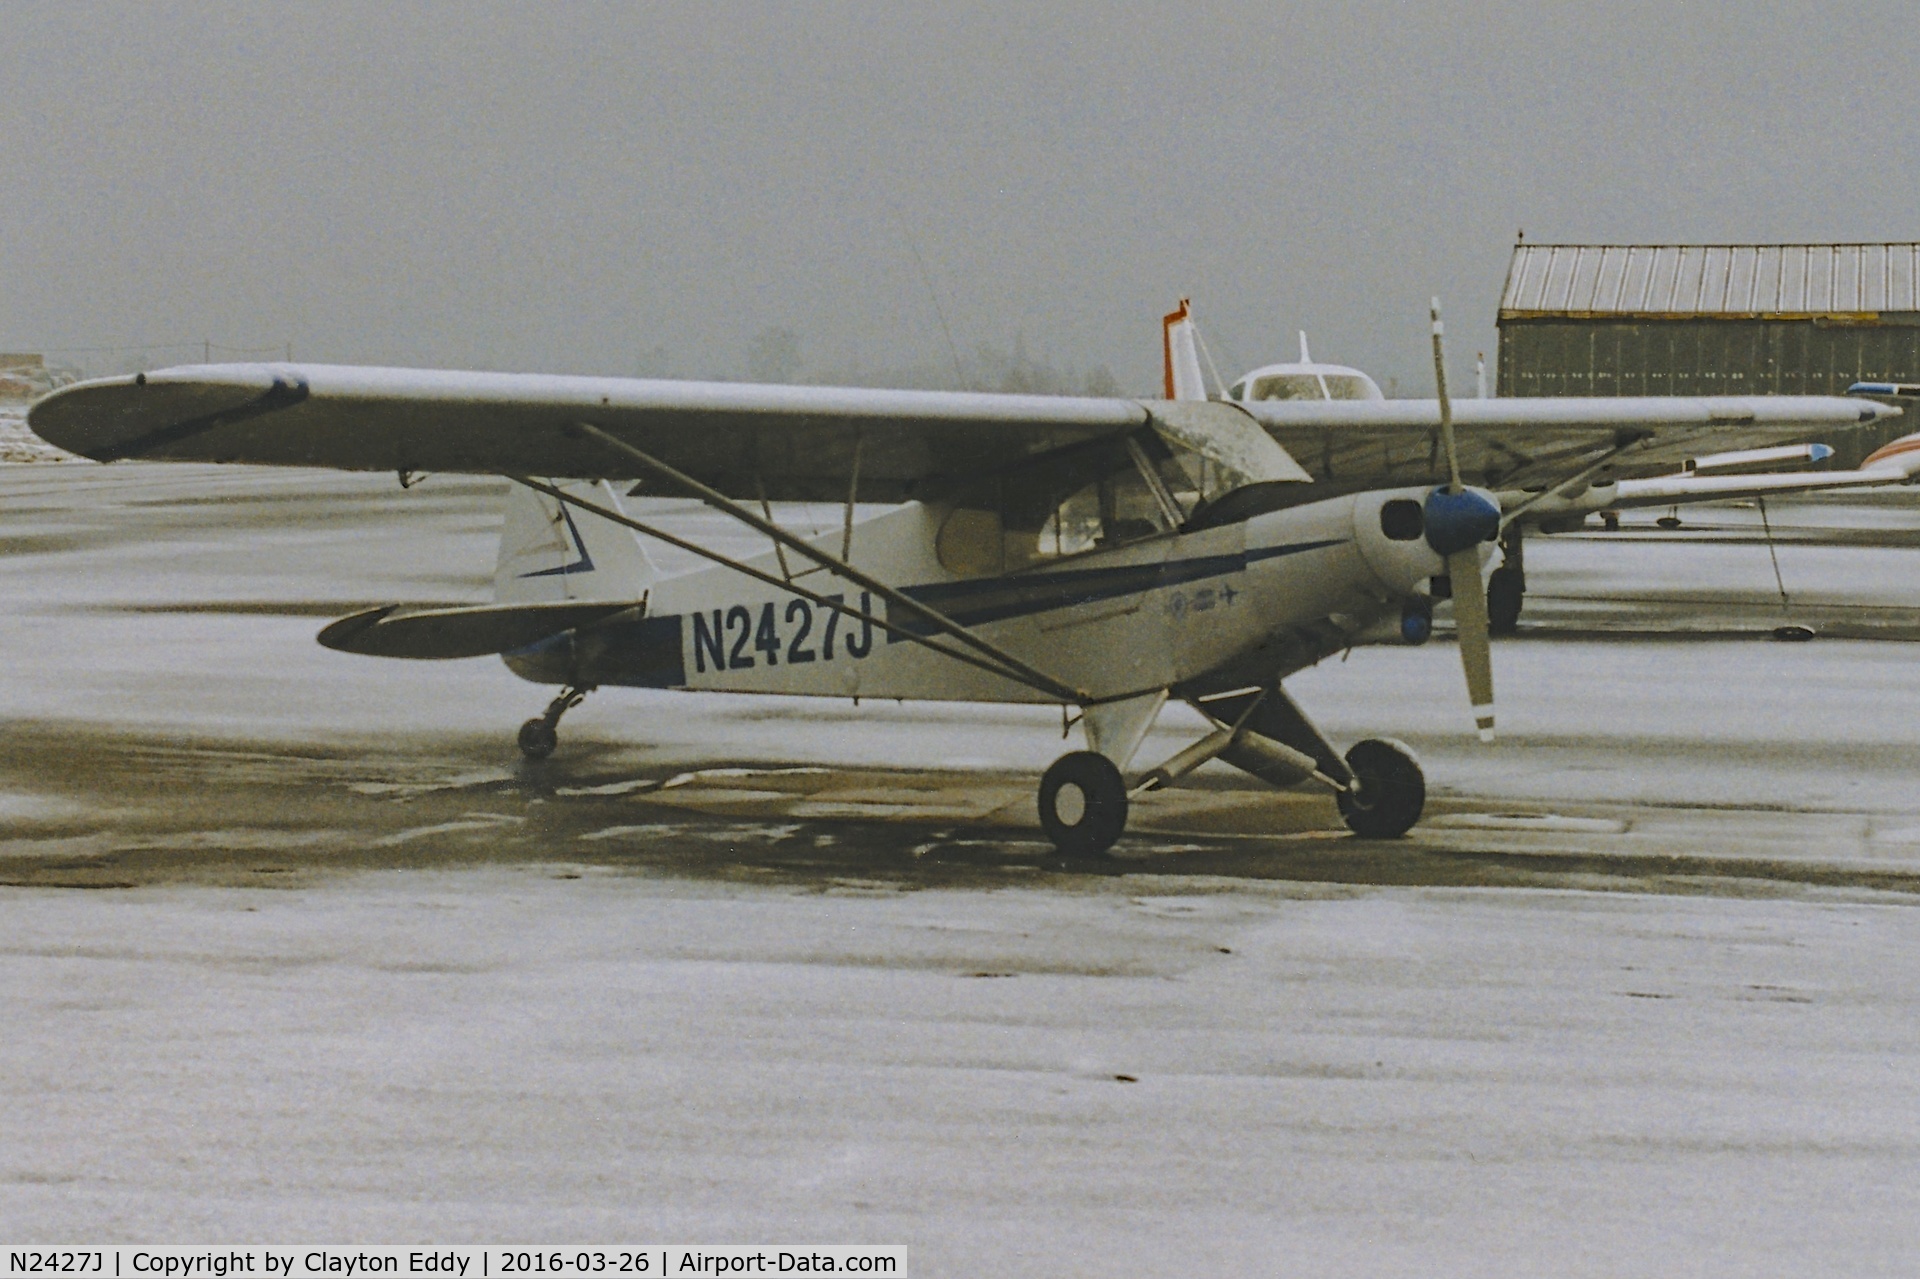 N2427J, 1979 Piper PA-18-150 Super Cub C/N 18-7909123, N2427J in the snow at Rio Vista airport California, in Union Flights colors.